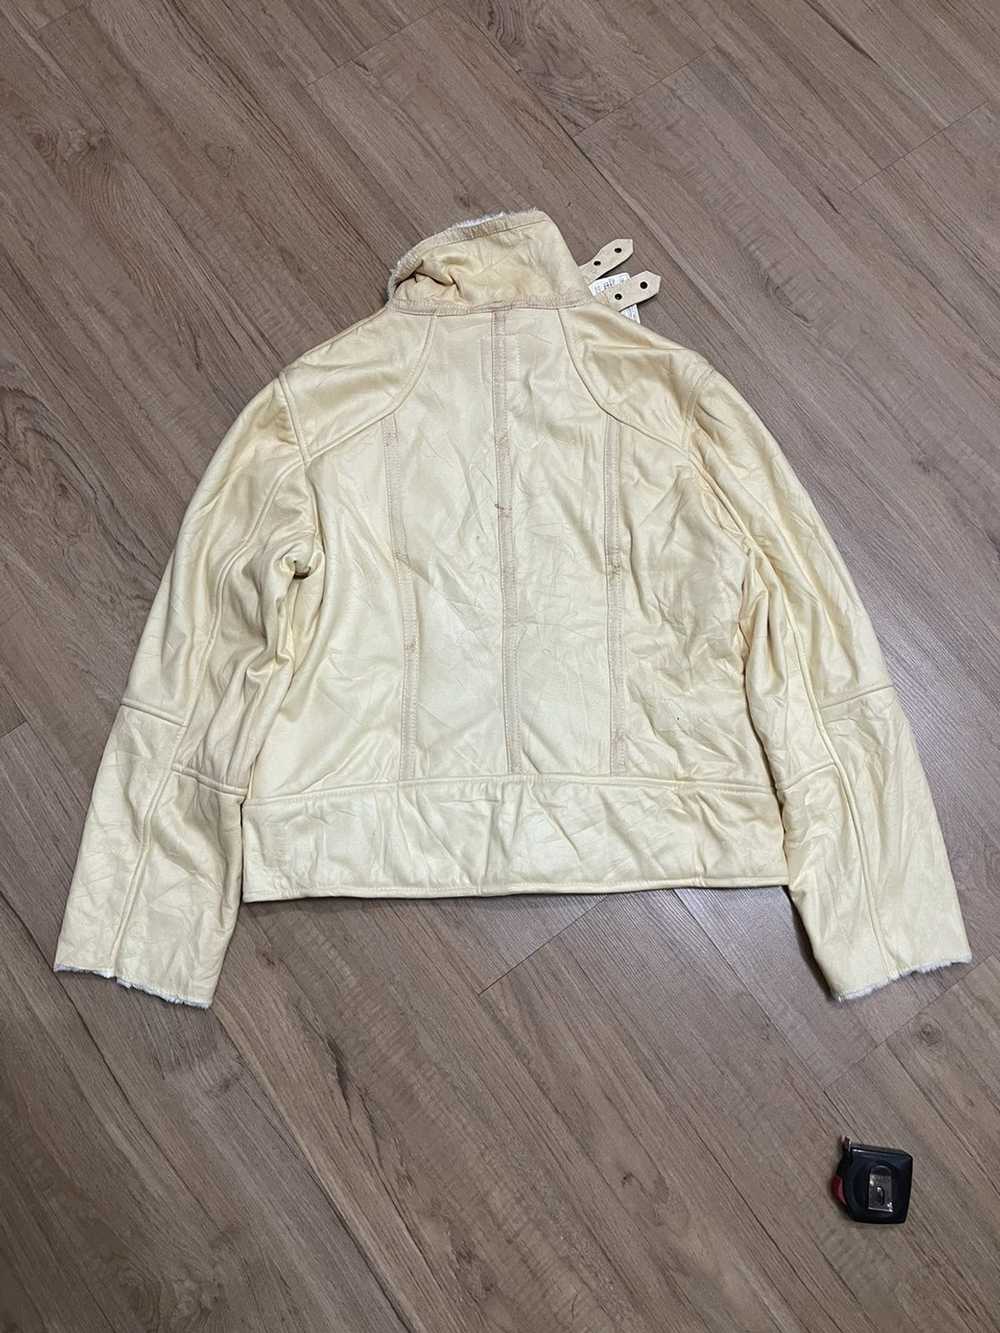 Japanese Brand NOS Credimi sherpa jacket - image 7